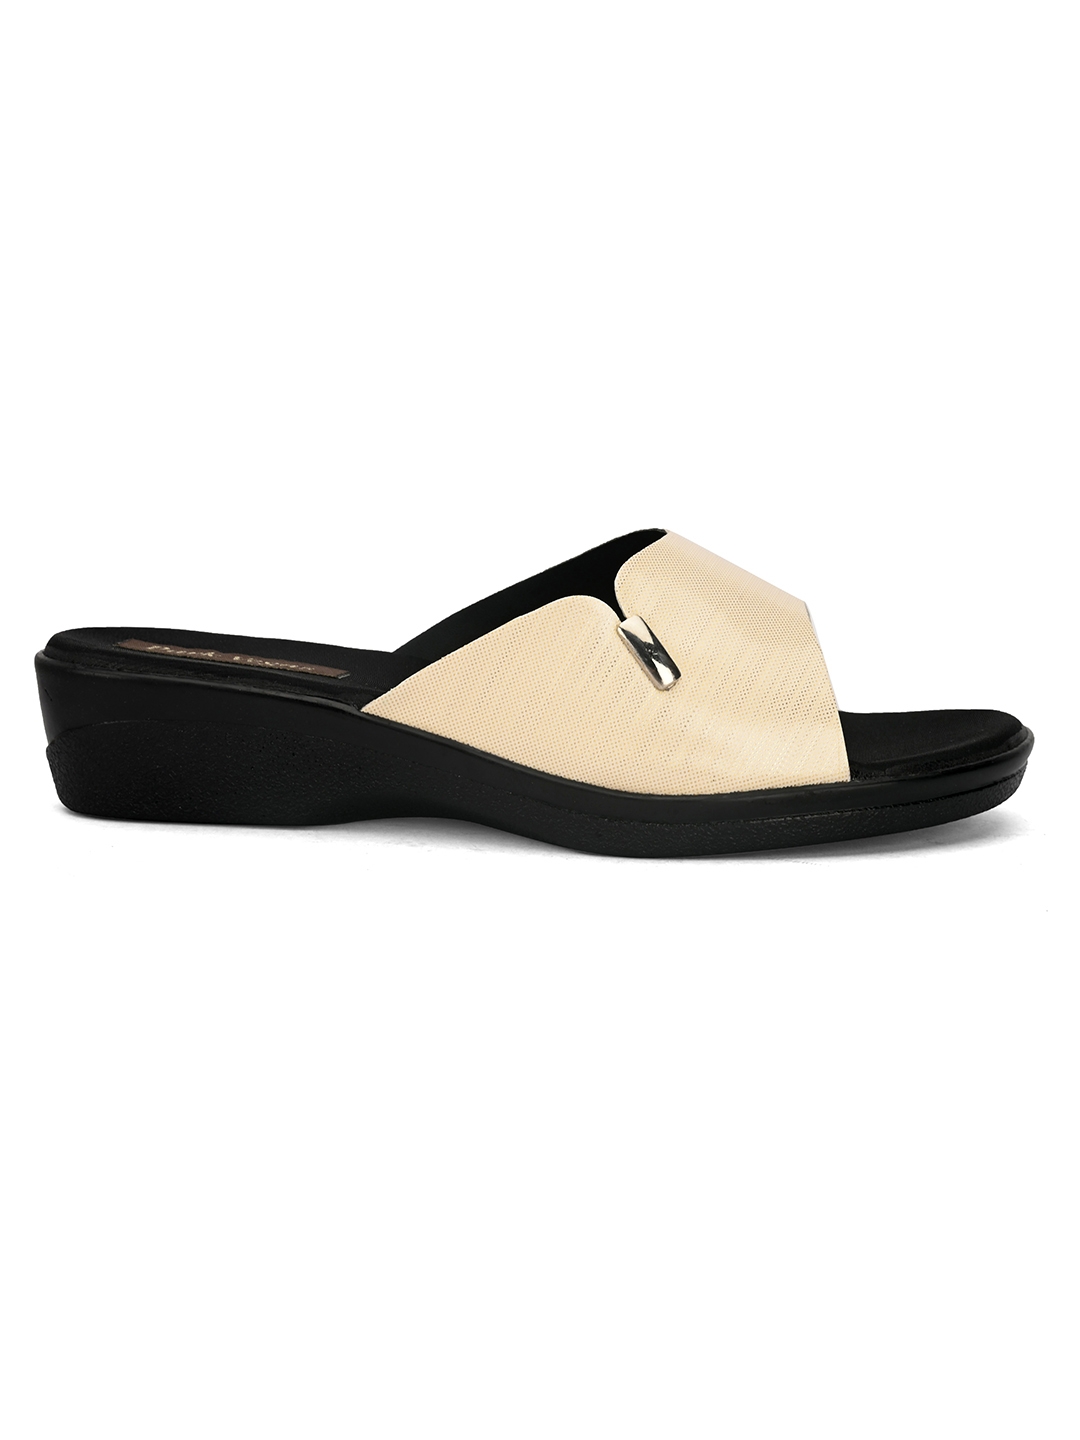 Dolce & Gabbana open-toe Leather Sandals - Farfetch